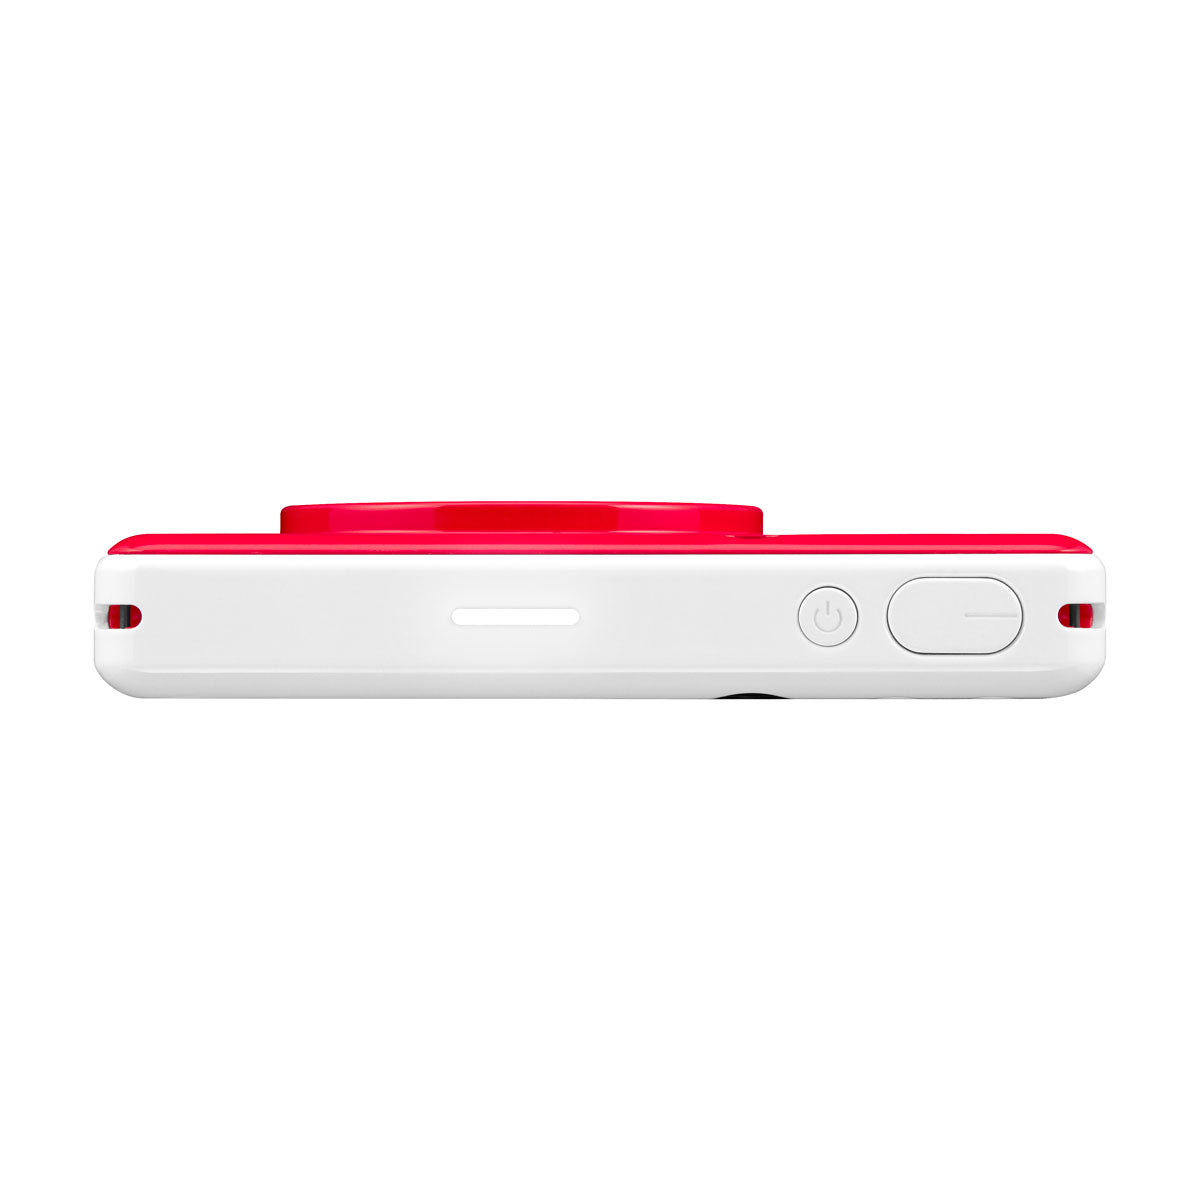 Canon IVY Cliq Instant Camera Printer (Ladybug Red)